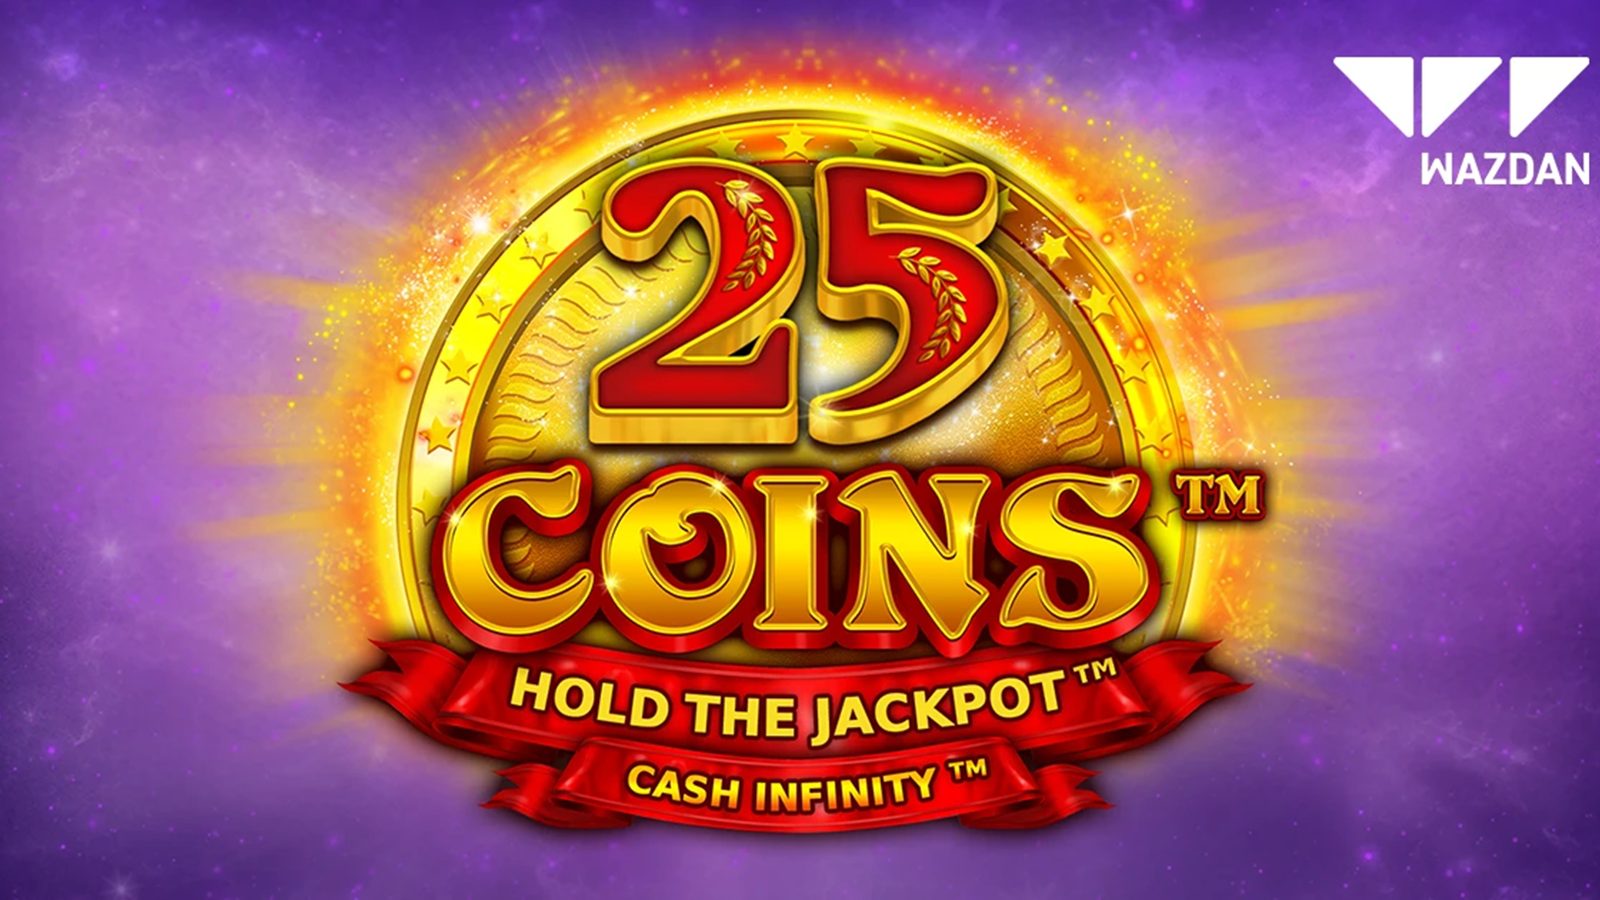 Wazdan Unveils 25 Coins™ Slot Game